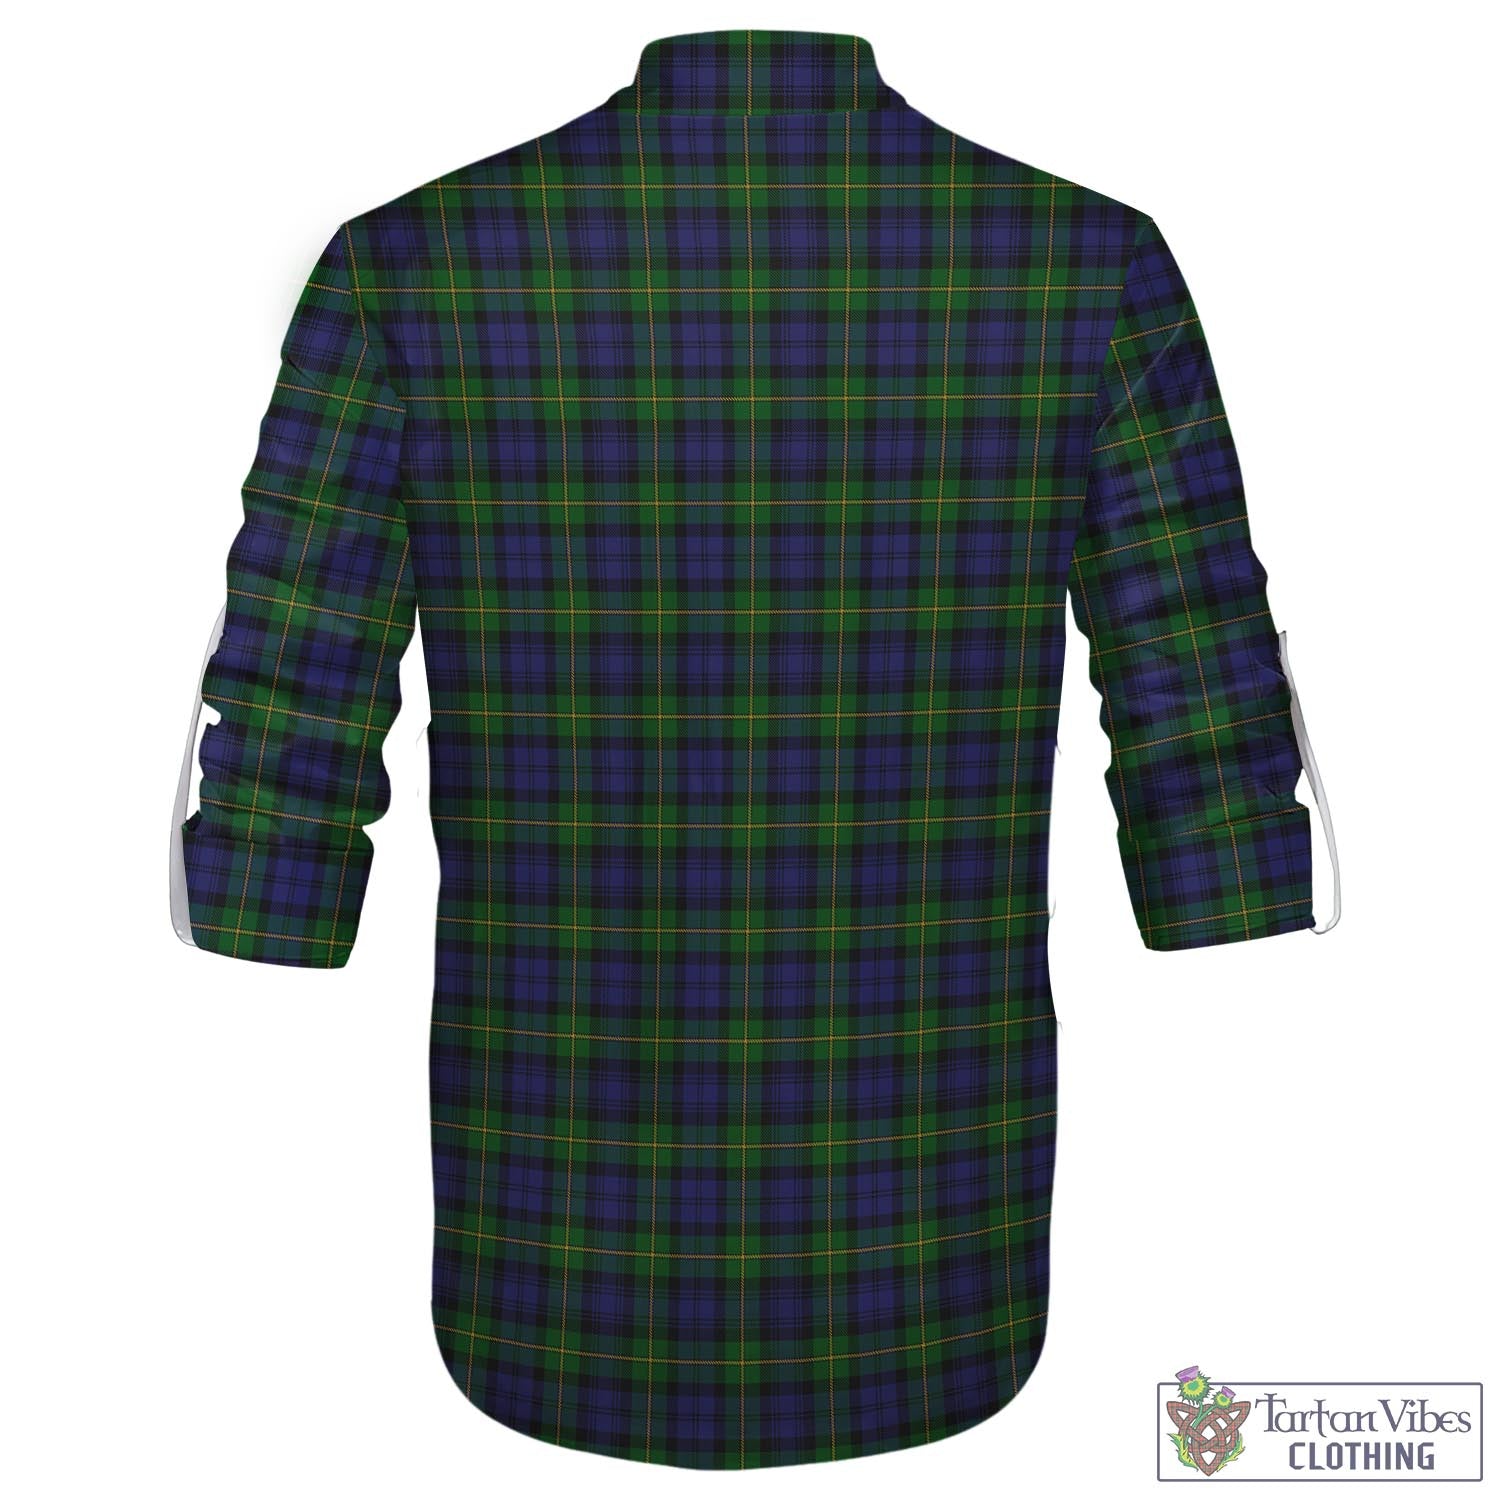 Tartan Vibes Clothing Gordon Tartan Men's Scottish Traditional Jacobite Ghillie Kilt Shirt with Family Crest